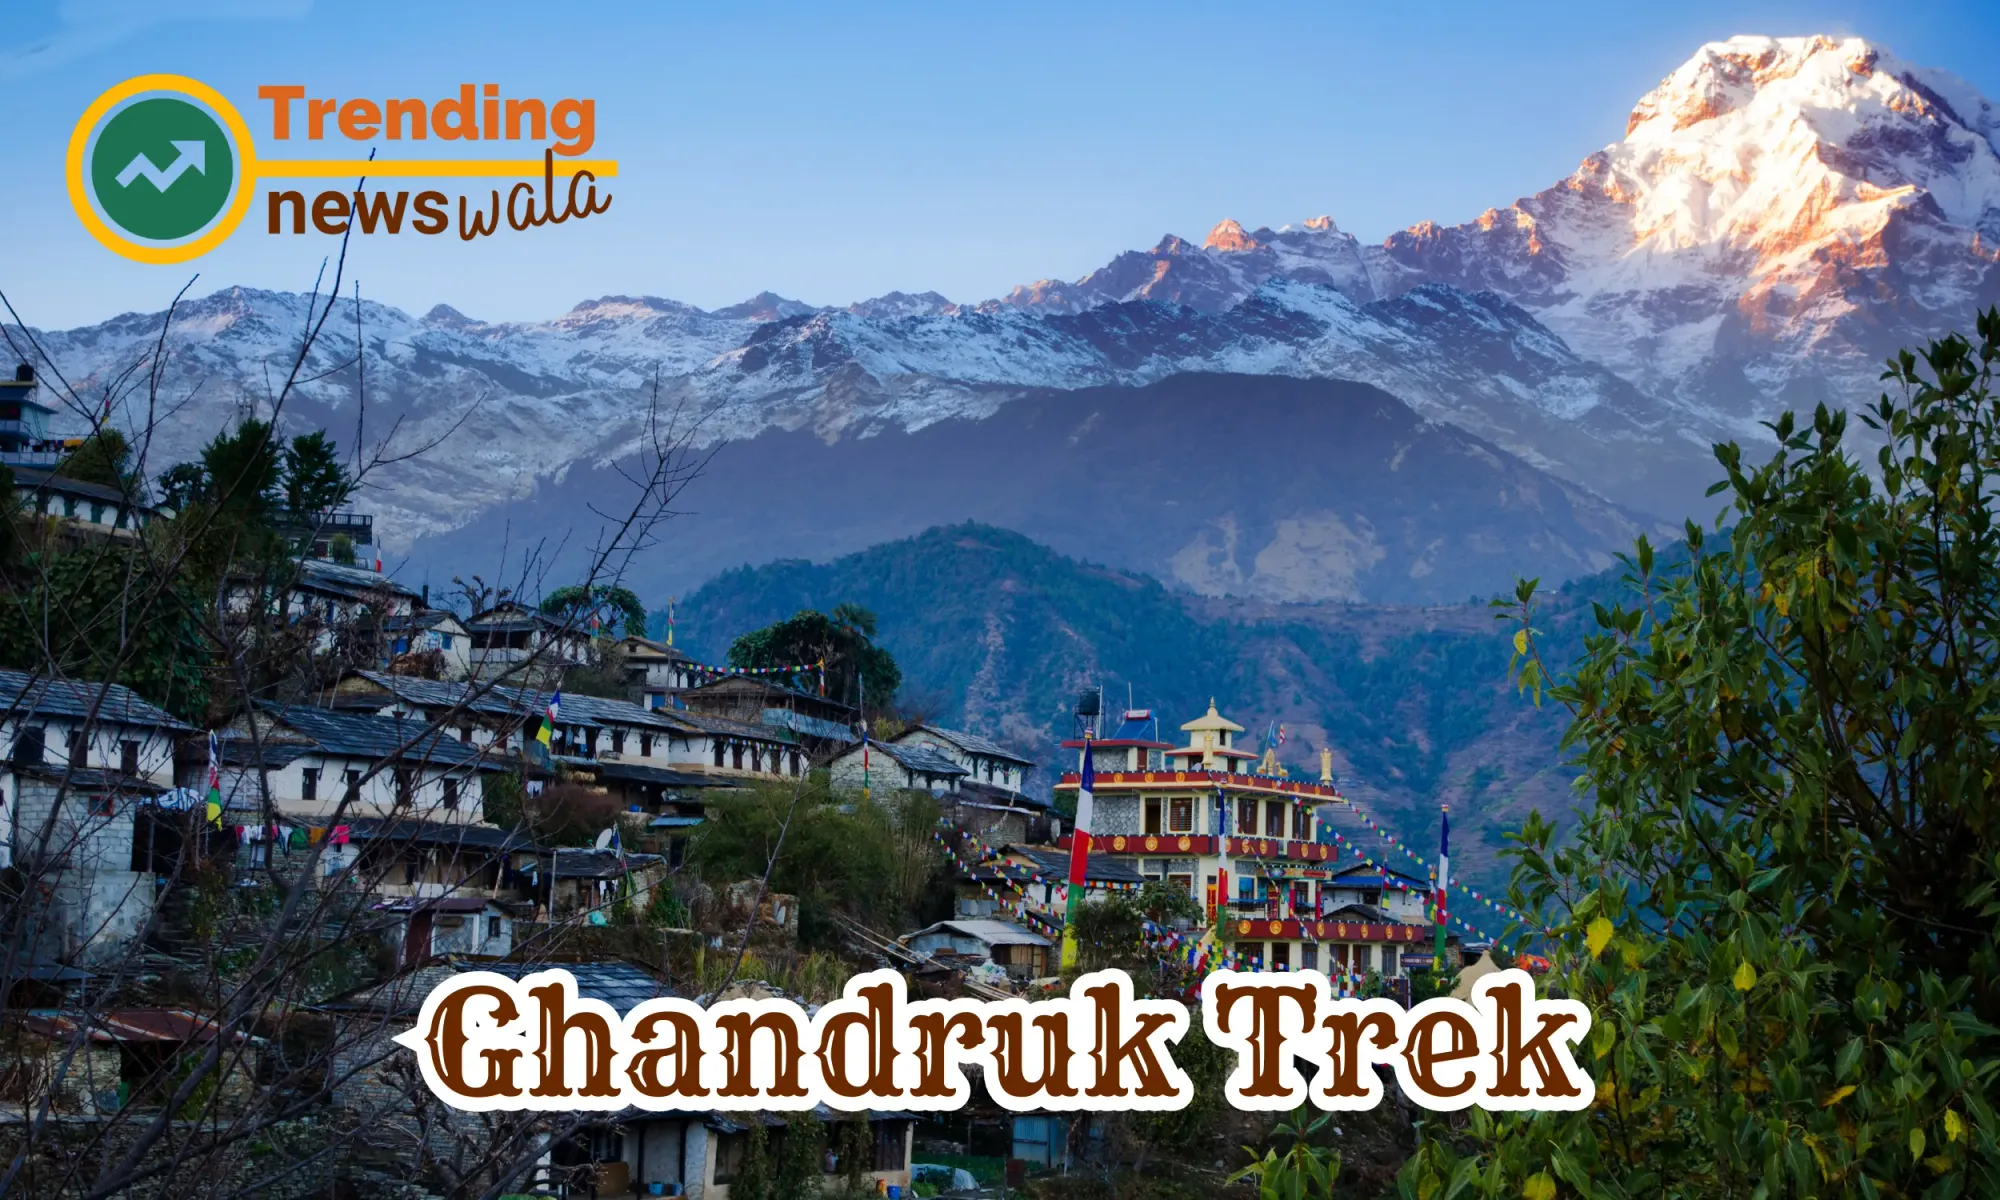 The Ghandruk Trek is a popular and relatively short trekking route in the Annapurna region of Nepal.